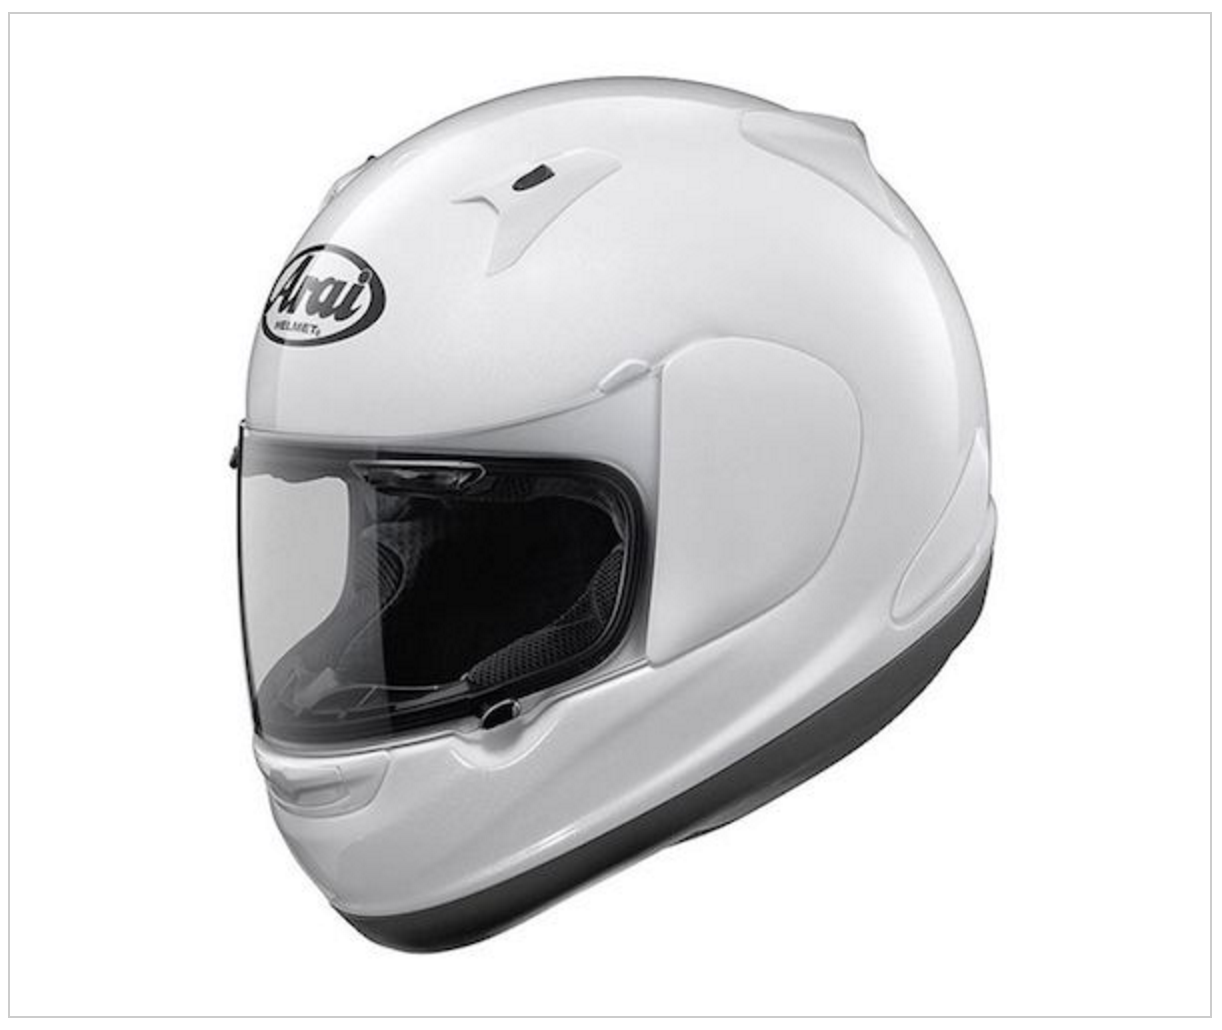 Arai Signet-Q Helmet Review: Long Oval Shaped Premium Helmet with